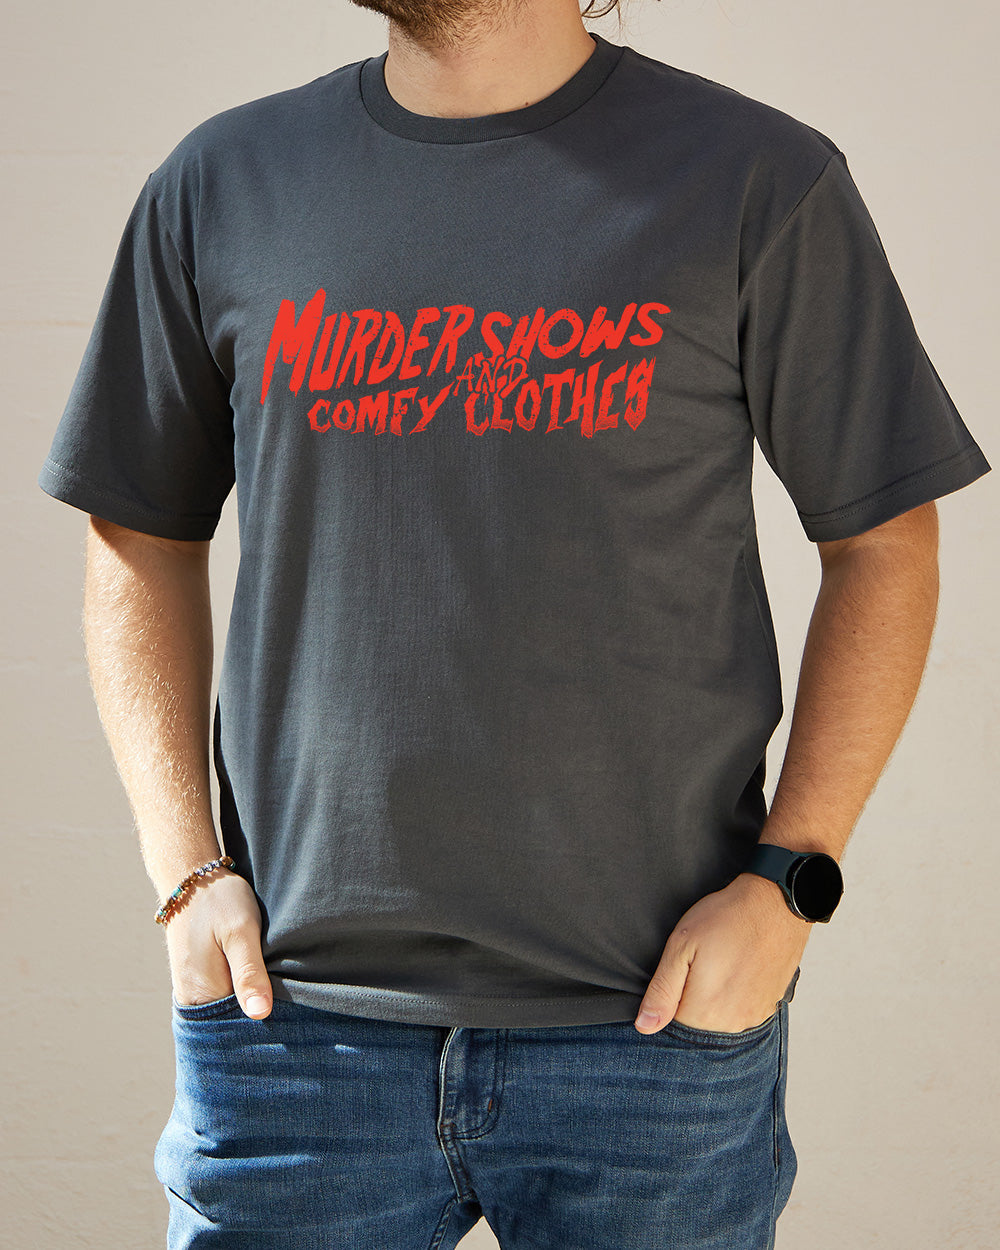 Murder Shows and Comfy Clothes T-Shirt Australia Online Coal